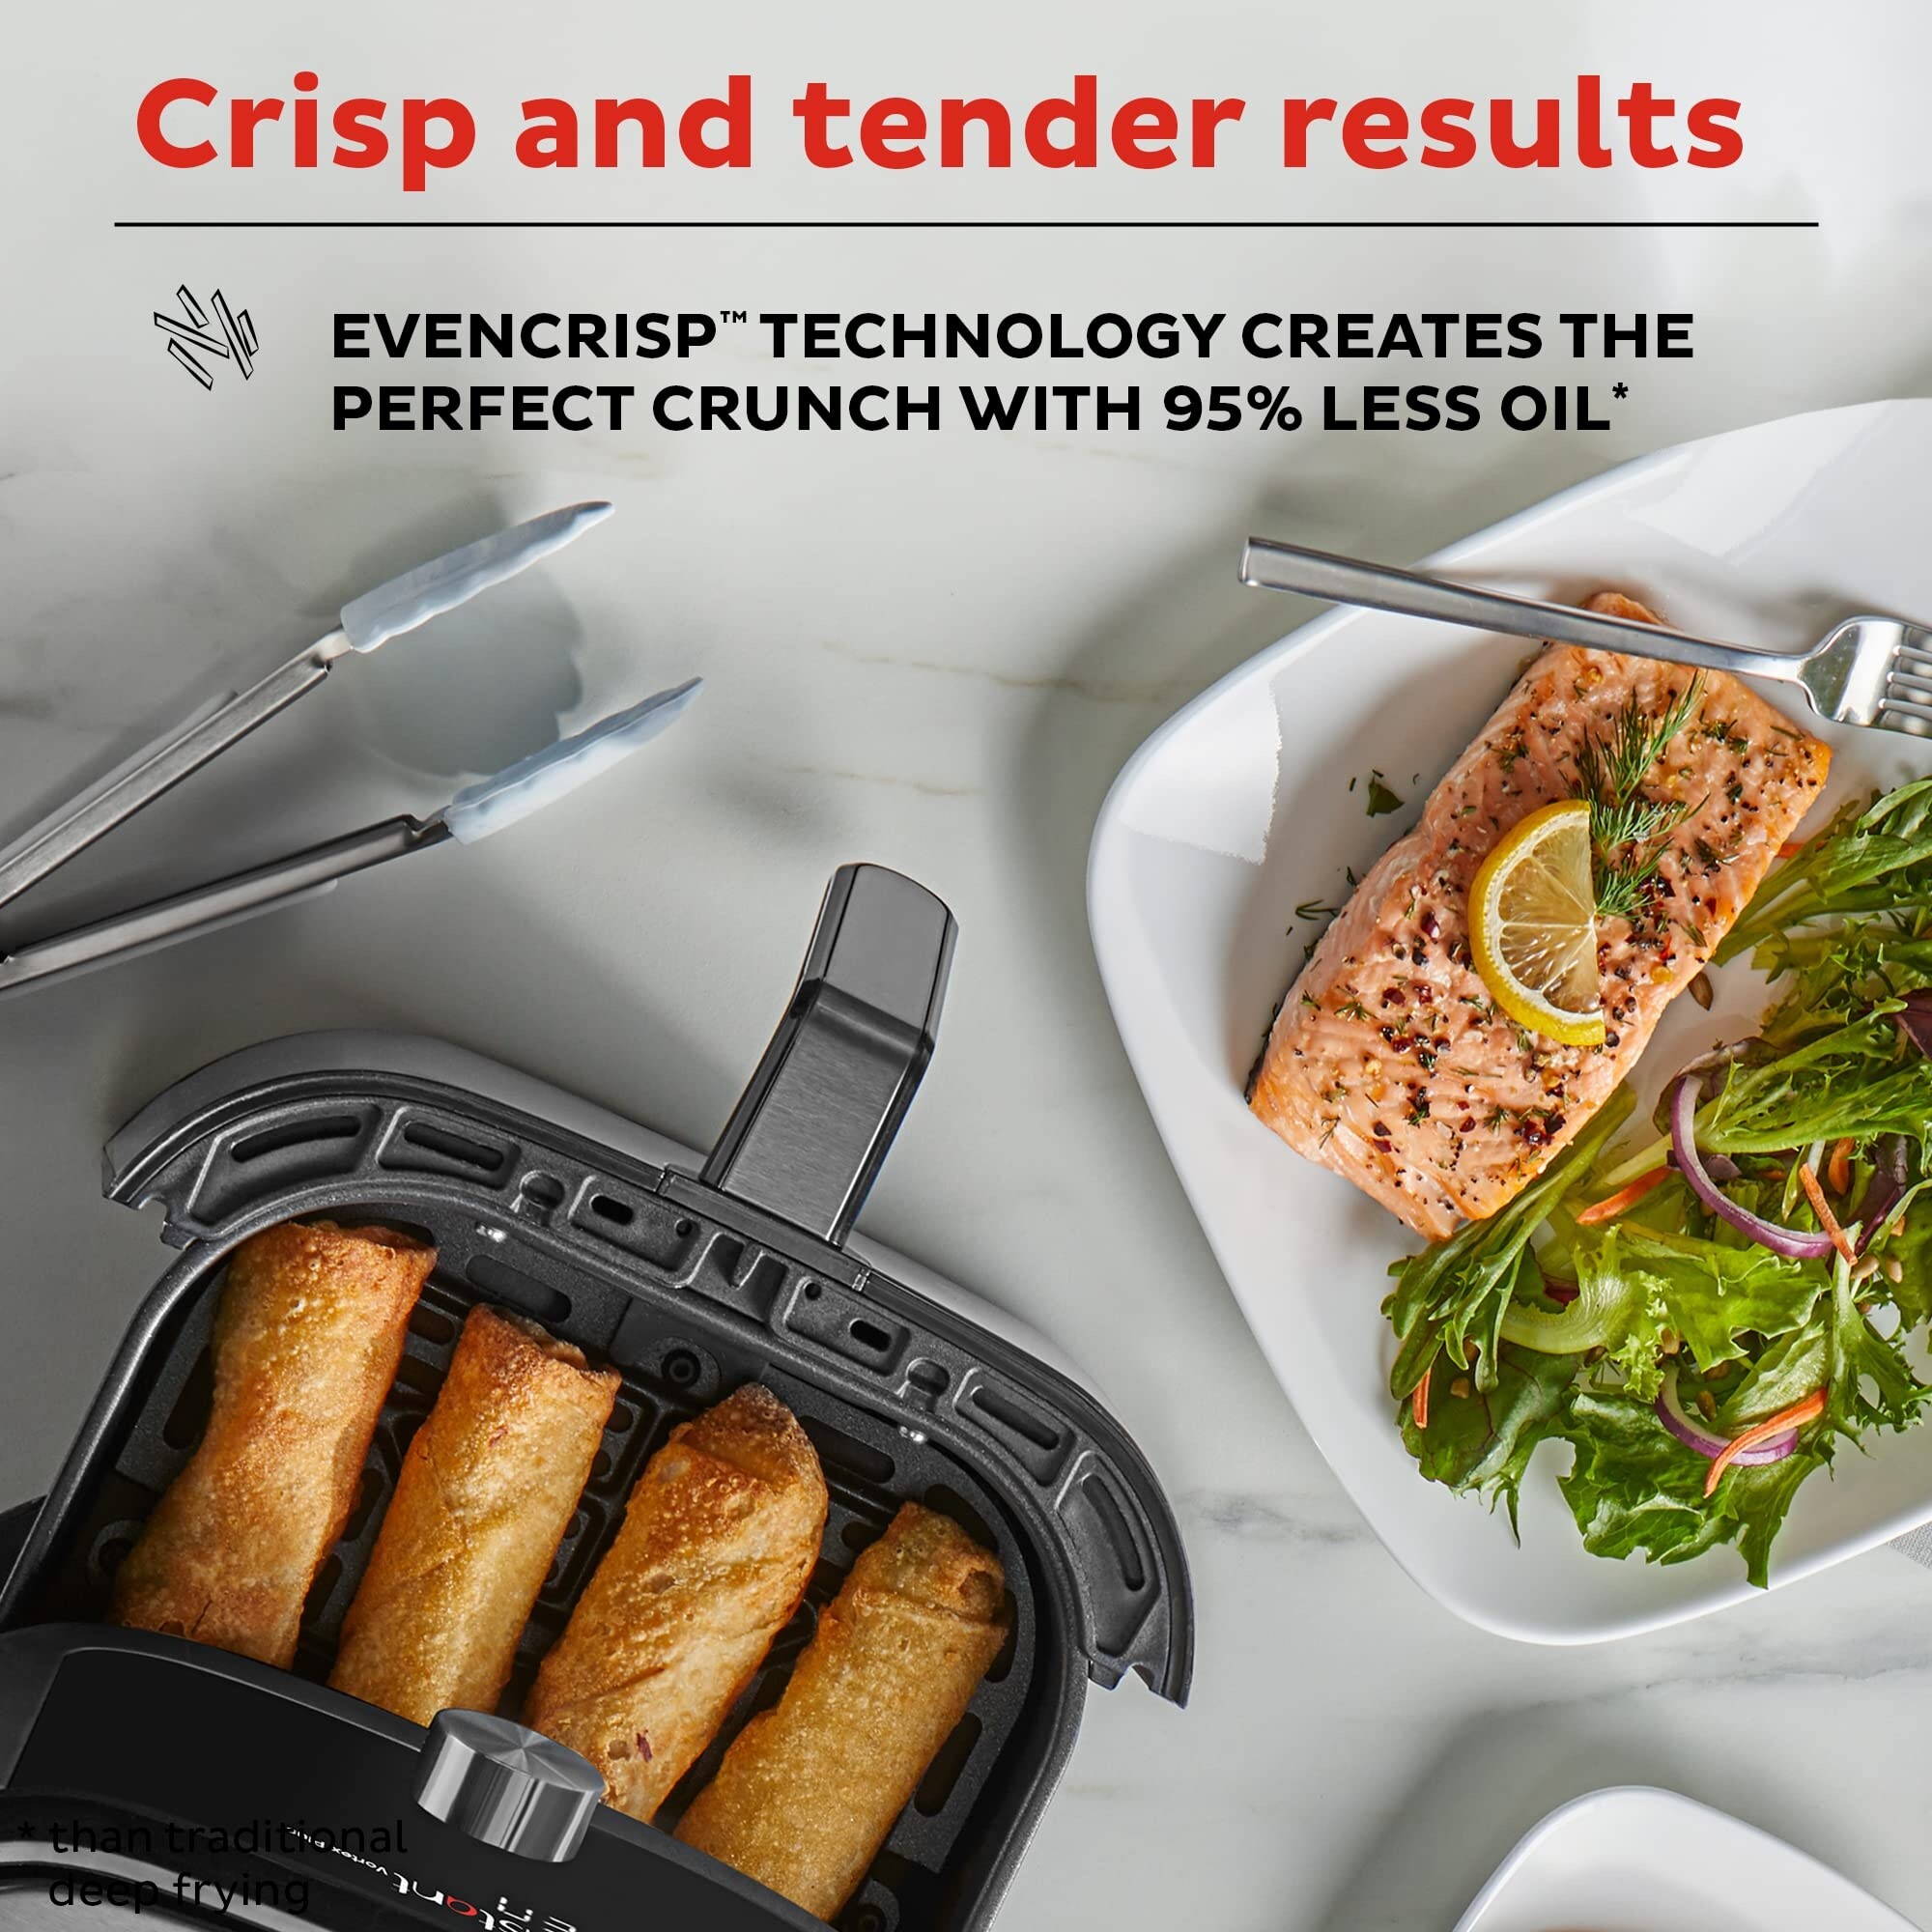 Edendirect 24.5 qt. Stainless Steel Air Fryer, 6-Slice Air Fryer Toaster Oven Combo, Roast, Bake, Reheat, Fry Oil-Free, ETL Listed (GBK-RA22091502)